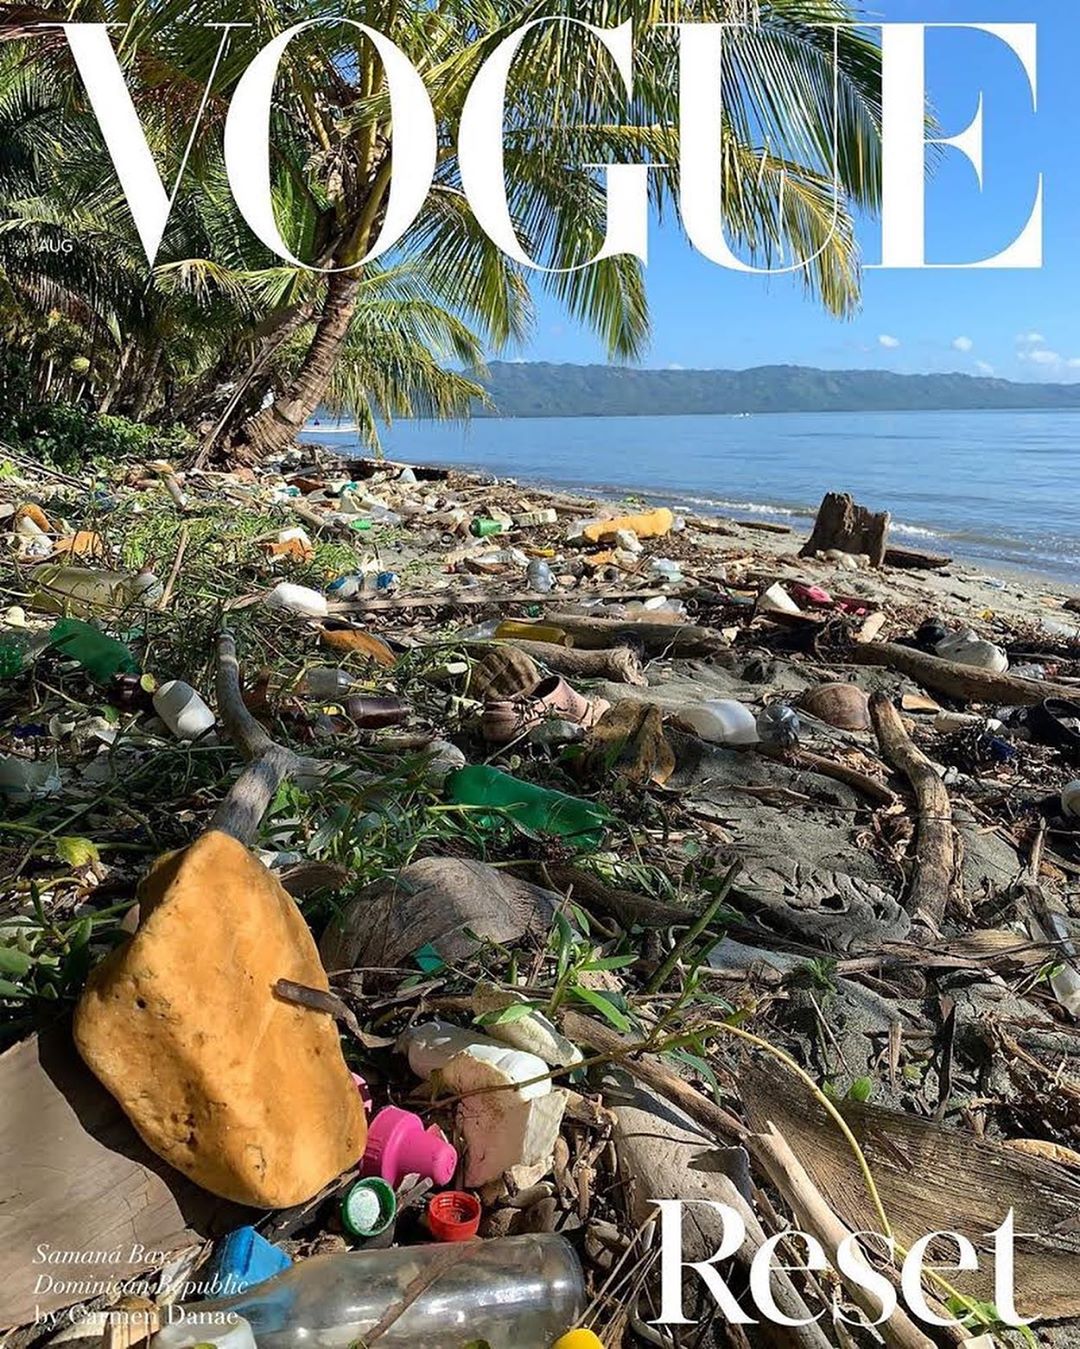 Portada Revista Bristh Vogue – República Dominicana